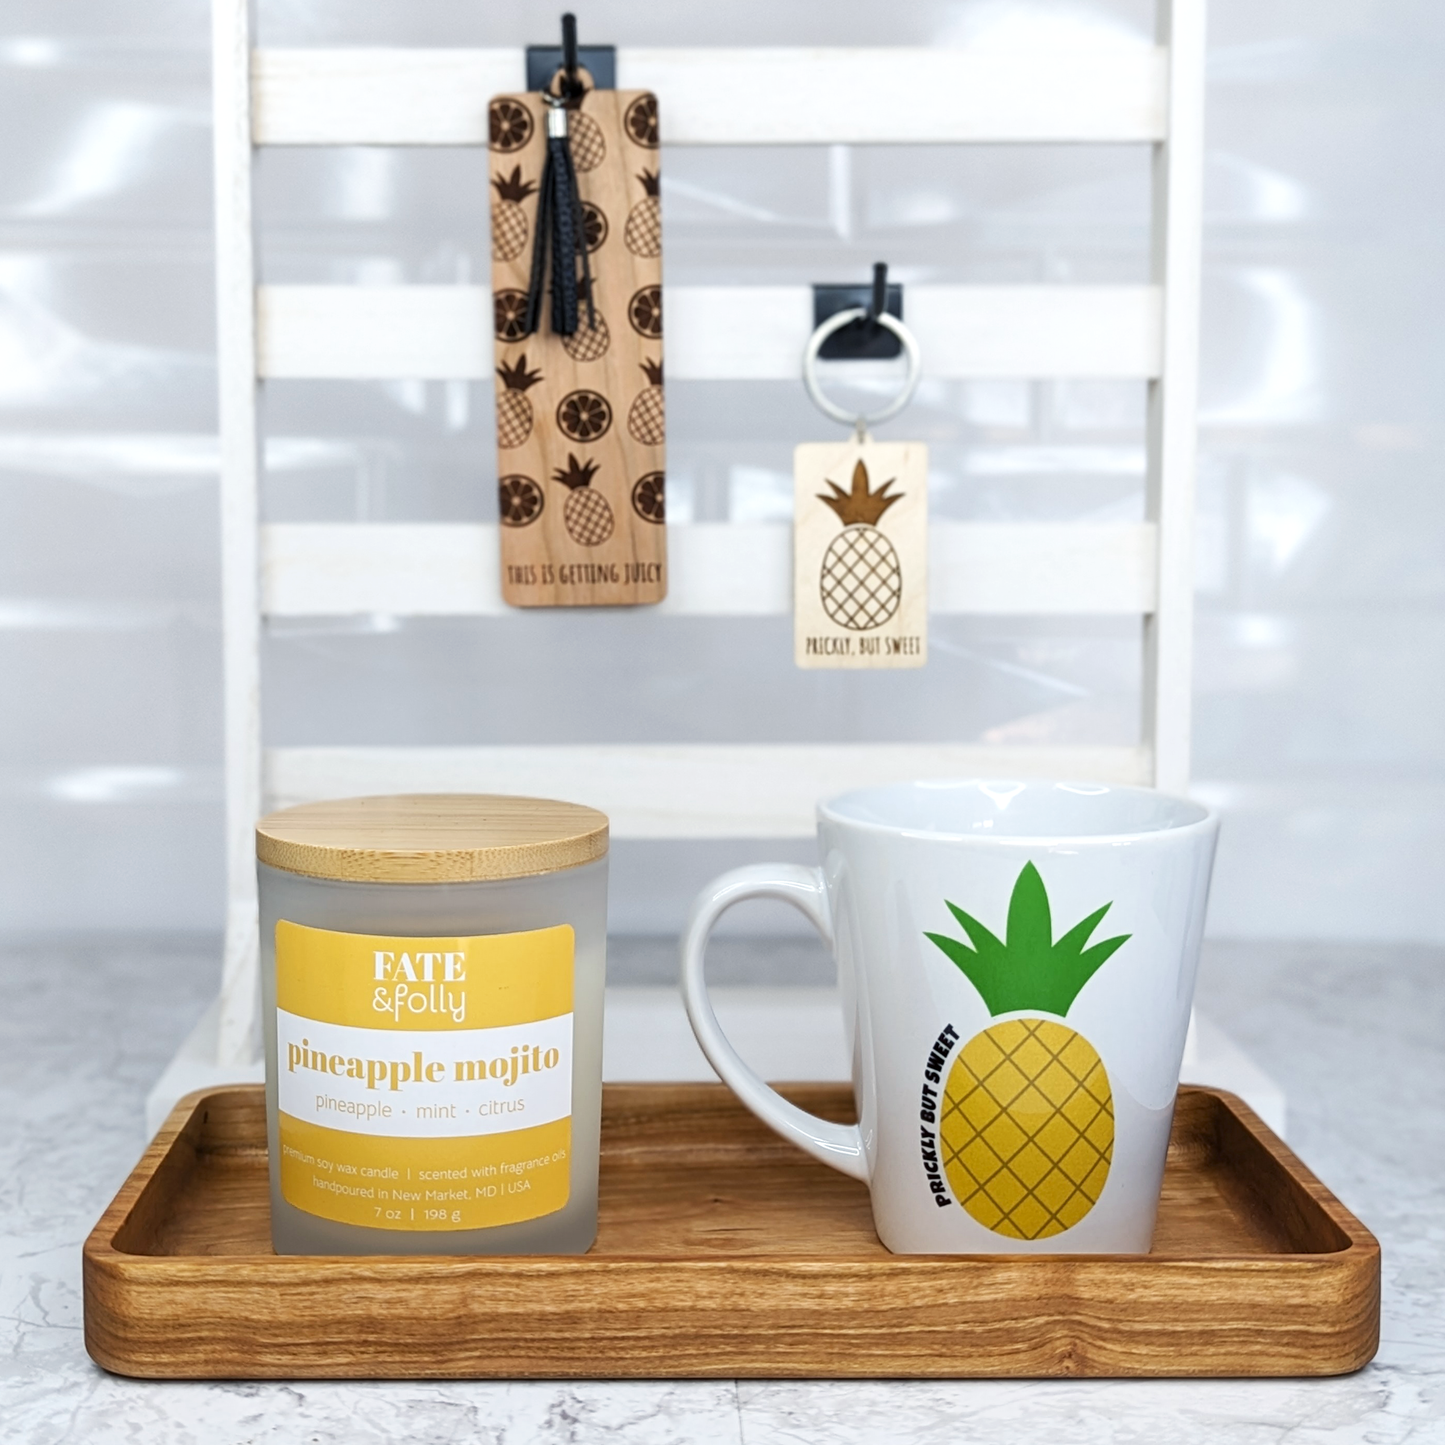 12oz Ceramic Latte Mug - Pineapple